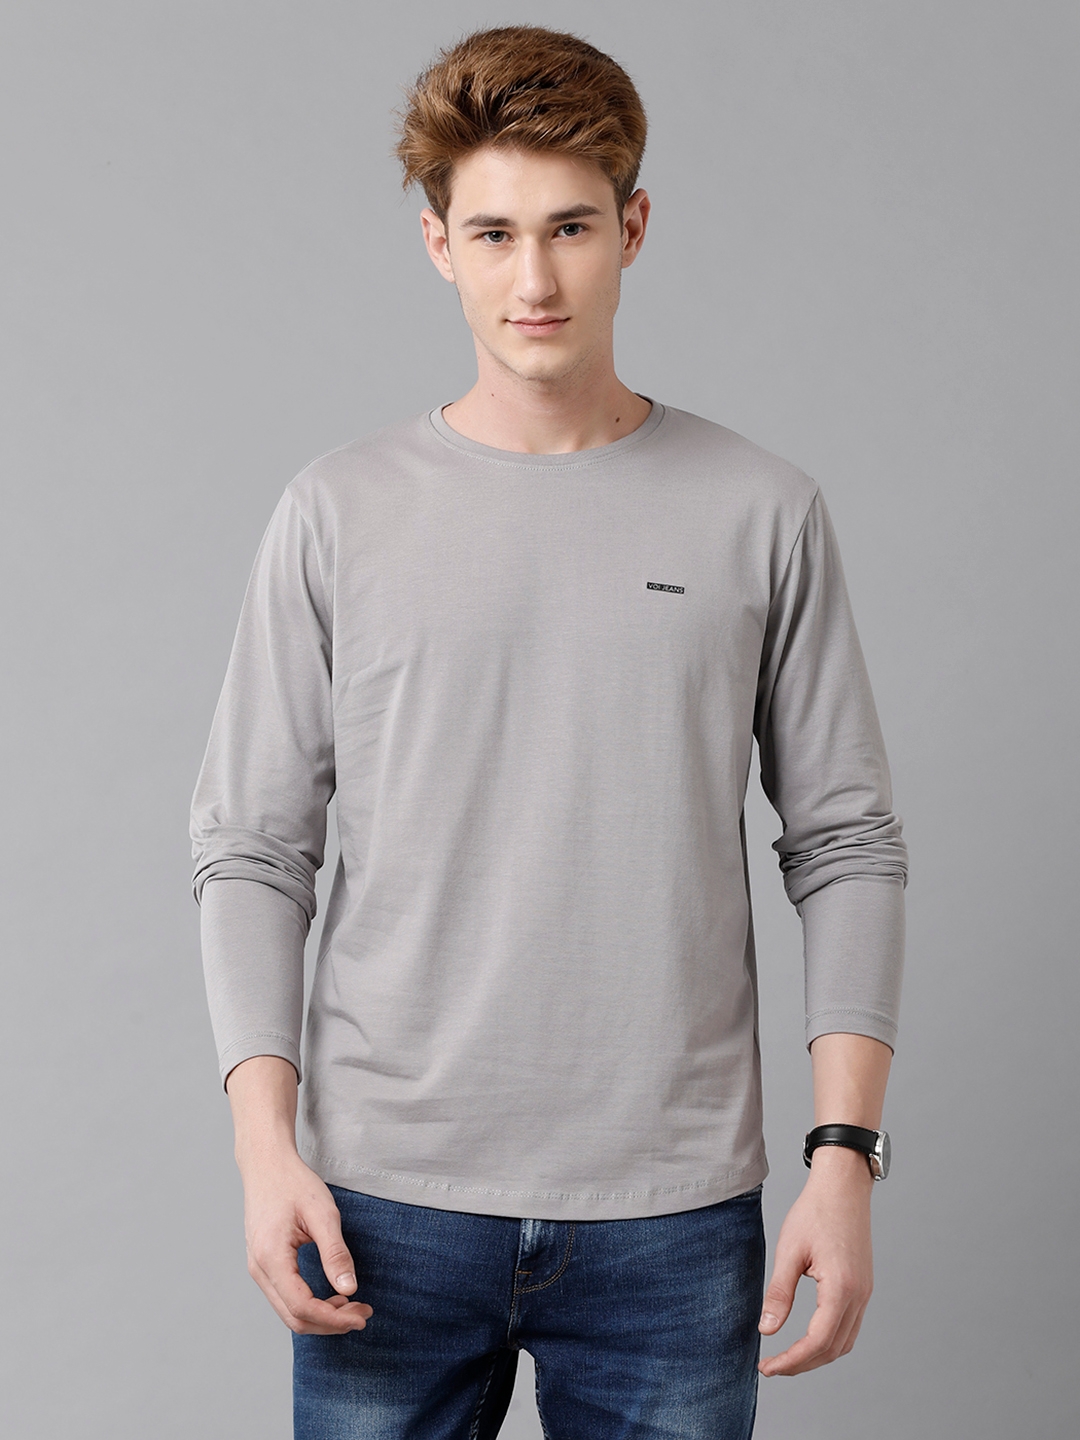 VOI JEANS Men's Solid Grey Cotton Blend Full Sleeved T-Shirt